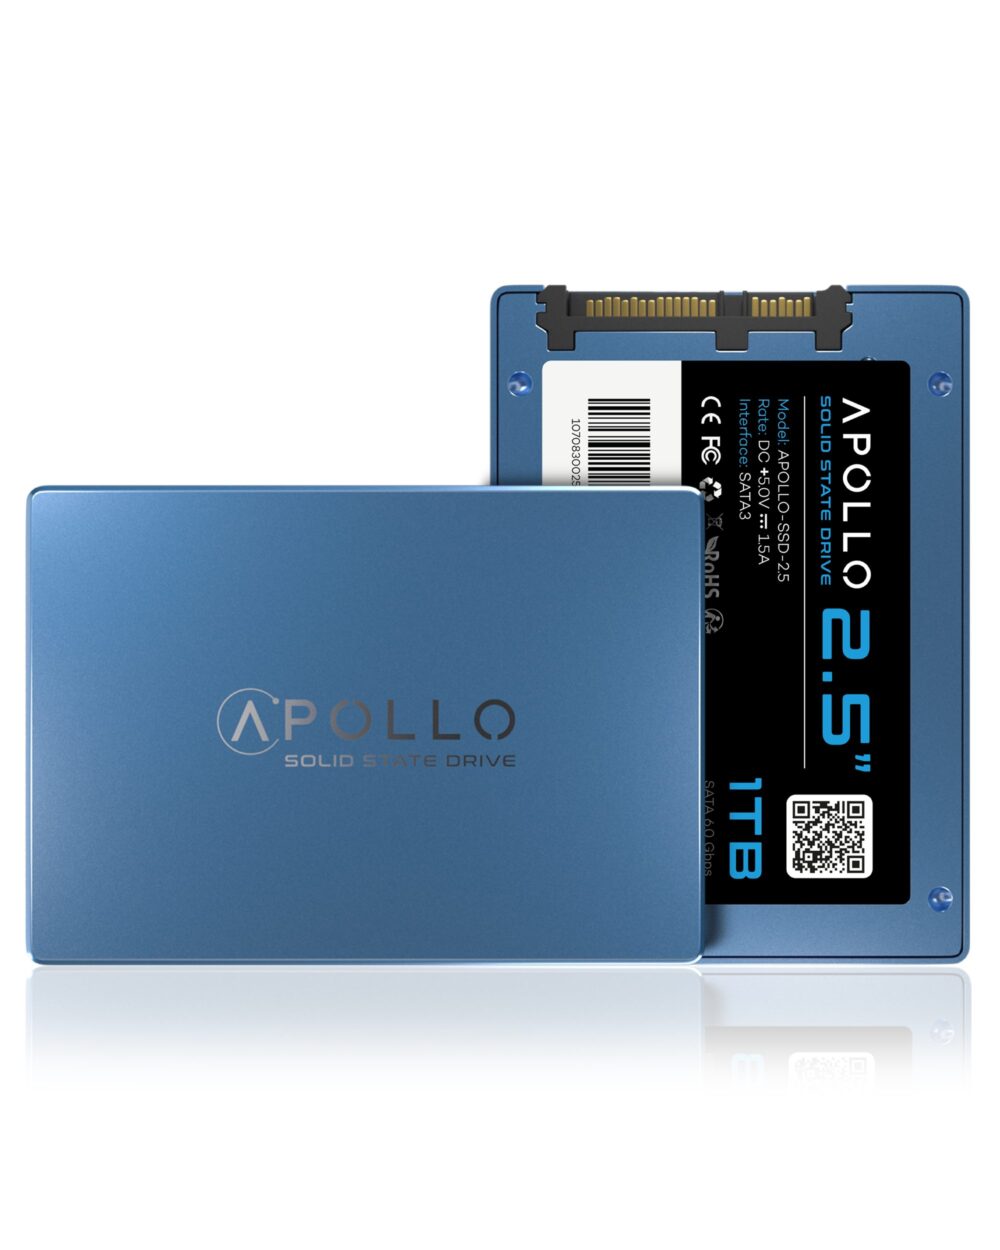 Apollo High Performance SSD TLC NAND – Iowa